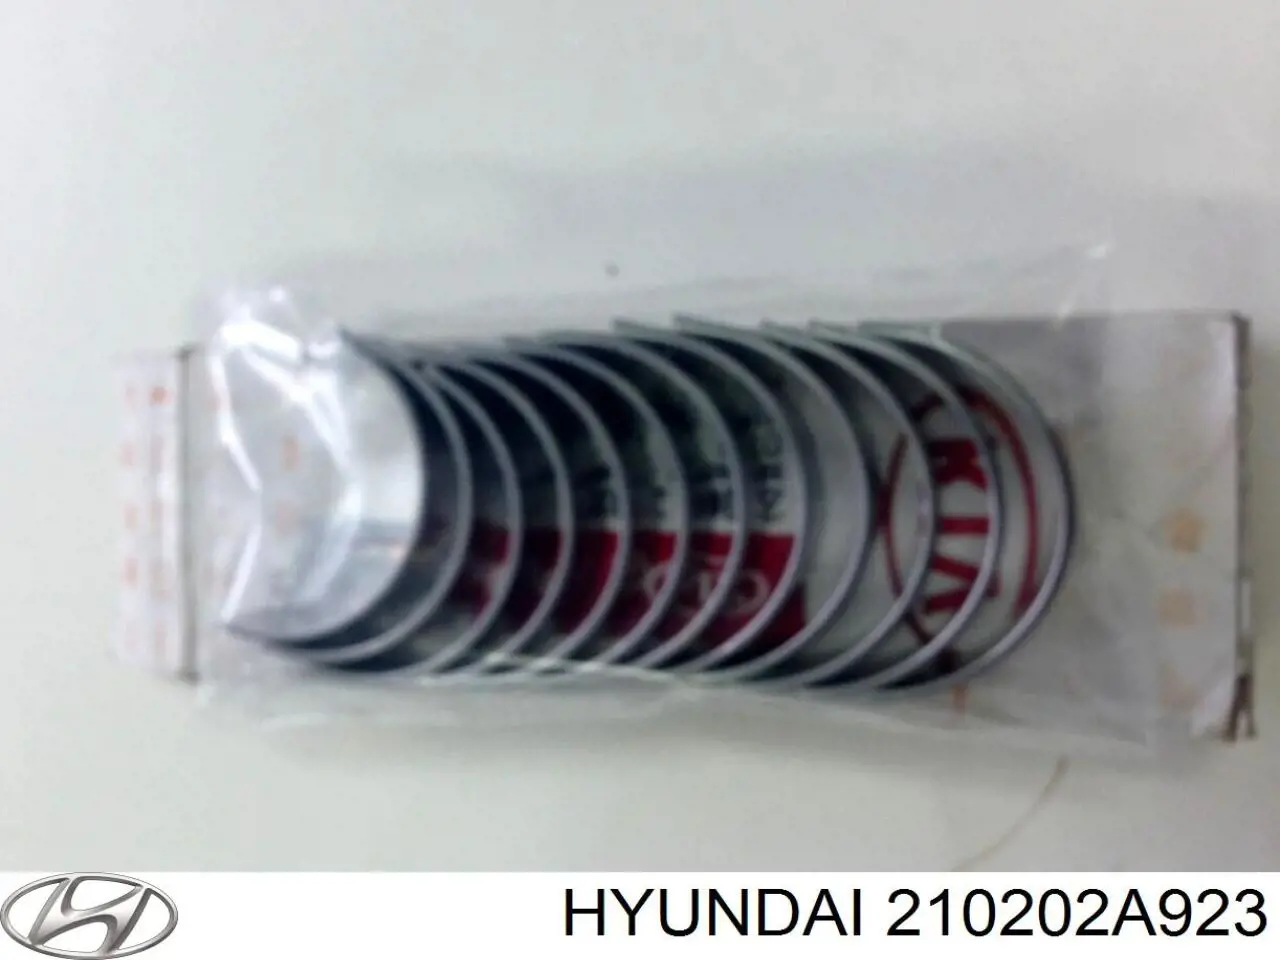 210202A921 Hyundai/Kia вкладыши коленвала коренные, комплект, стандарт (std)